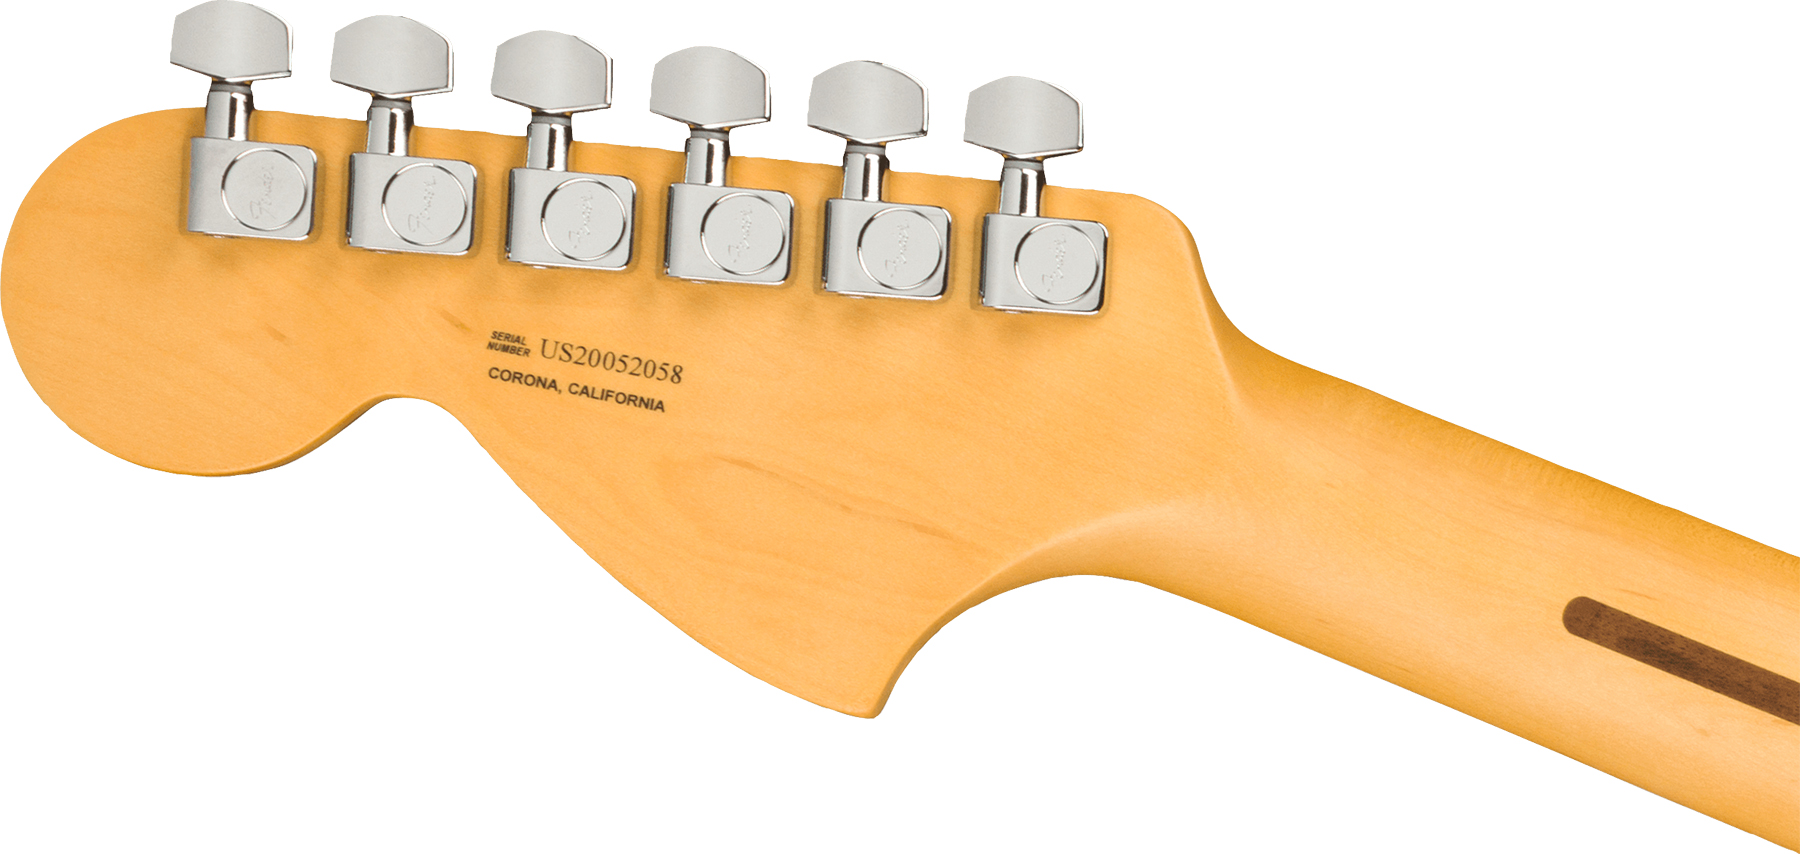 Fender Tele Deluxe American Professional Ii Usa Rw - 3-color Sunburst - Guitarra eléctrica con forma de tel - Variation 1